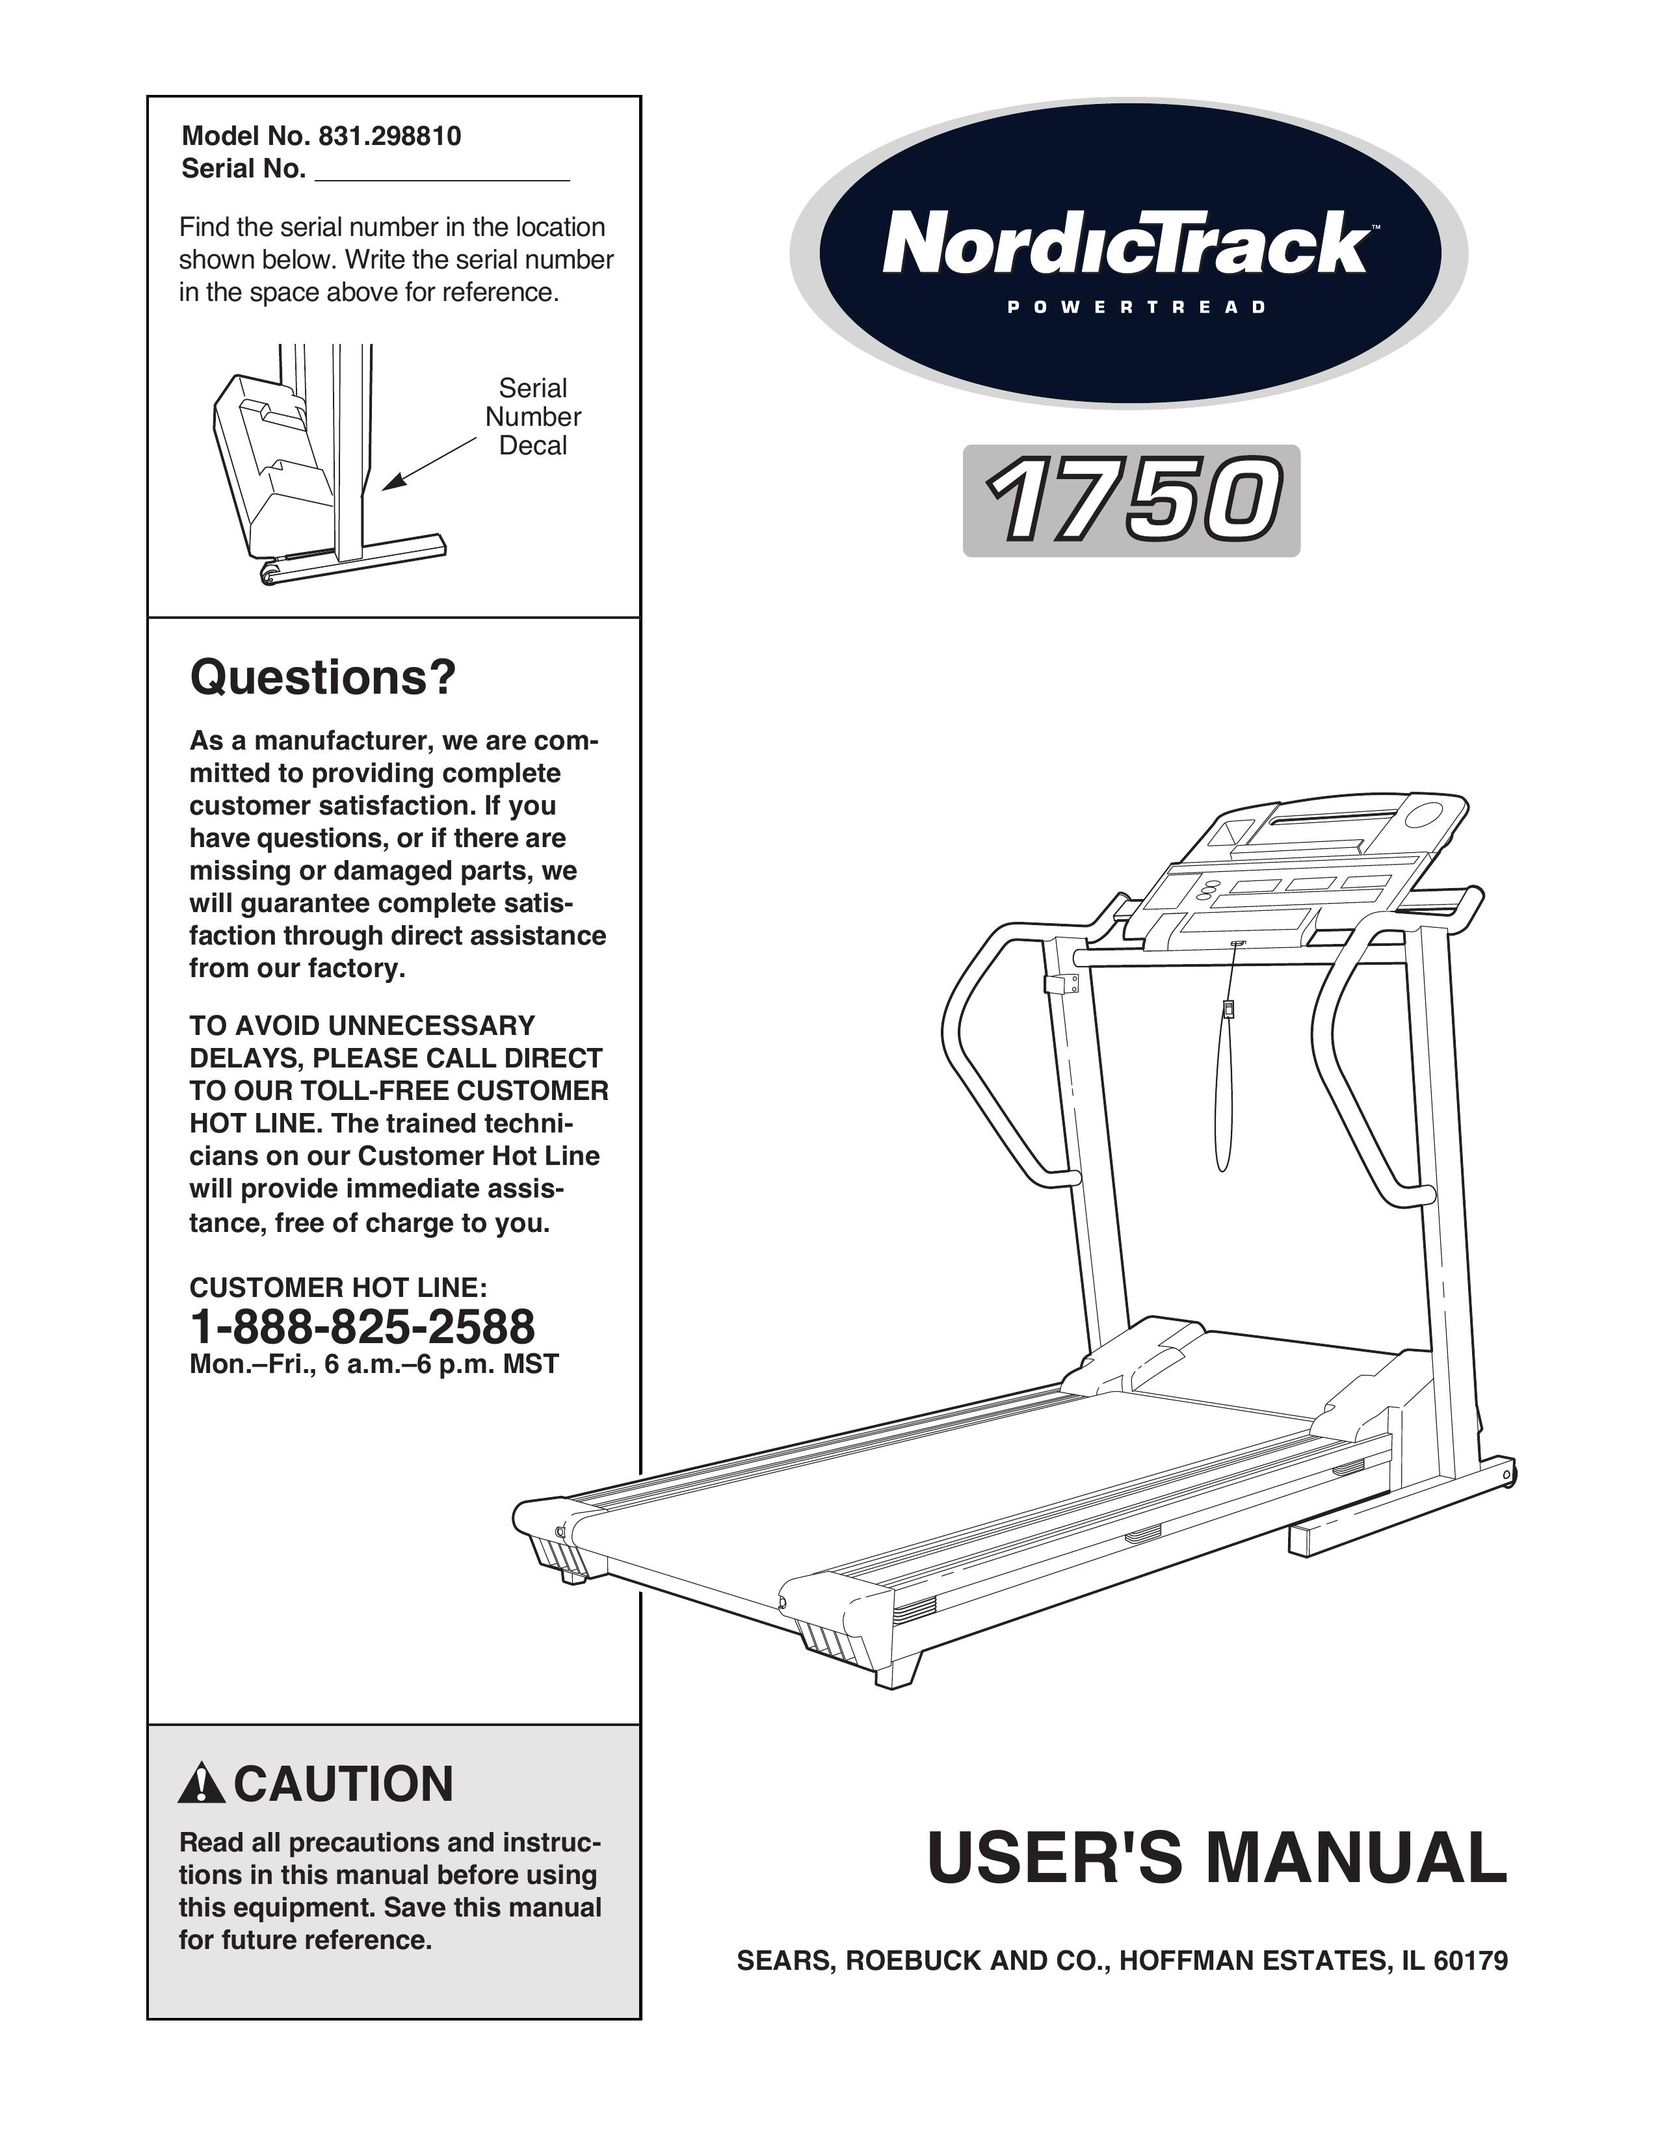 NordicTrack 831.298810 Treadmill User Manual